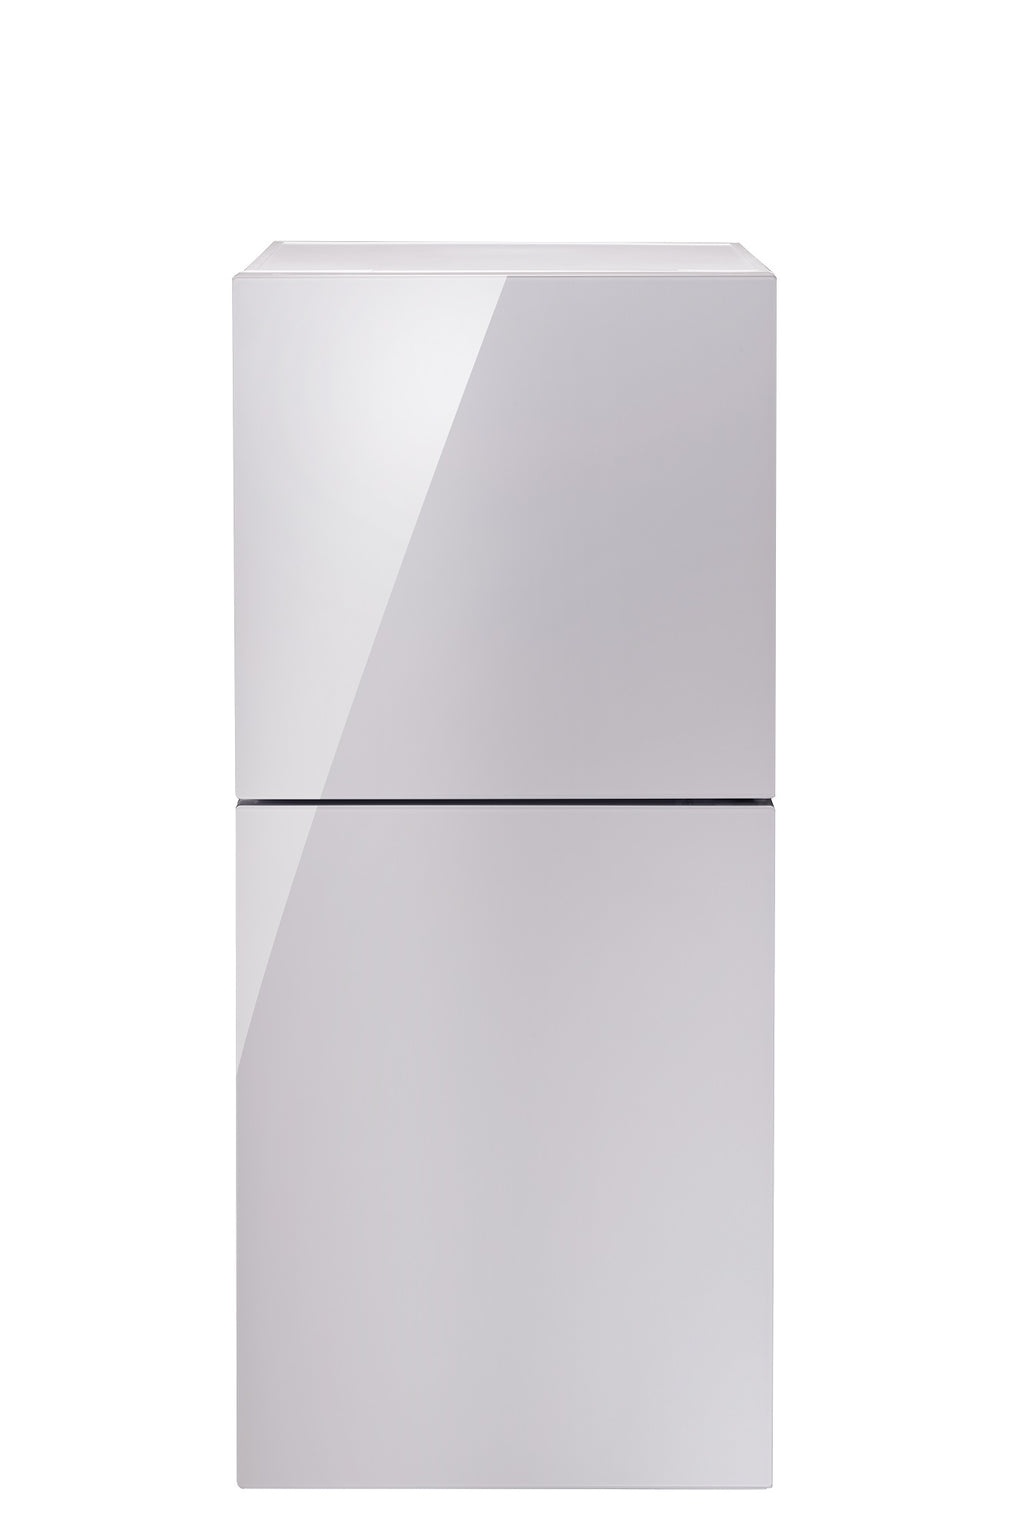 TWINBIRD 電気冷凍冷蔵庫 HR-D286型 - 家電